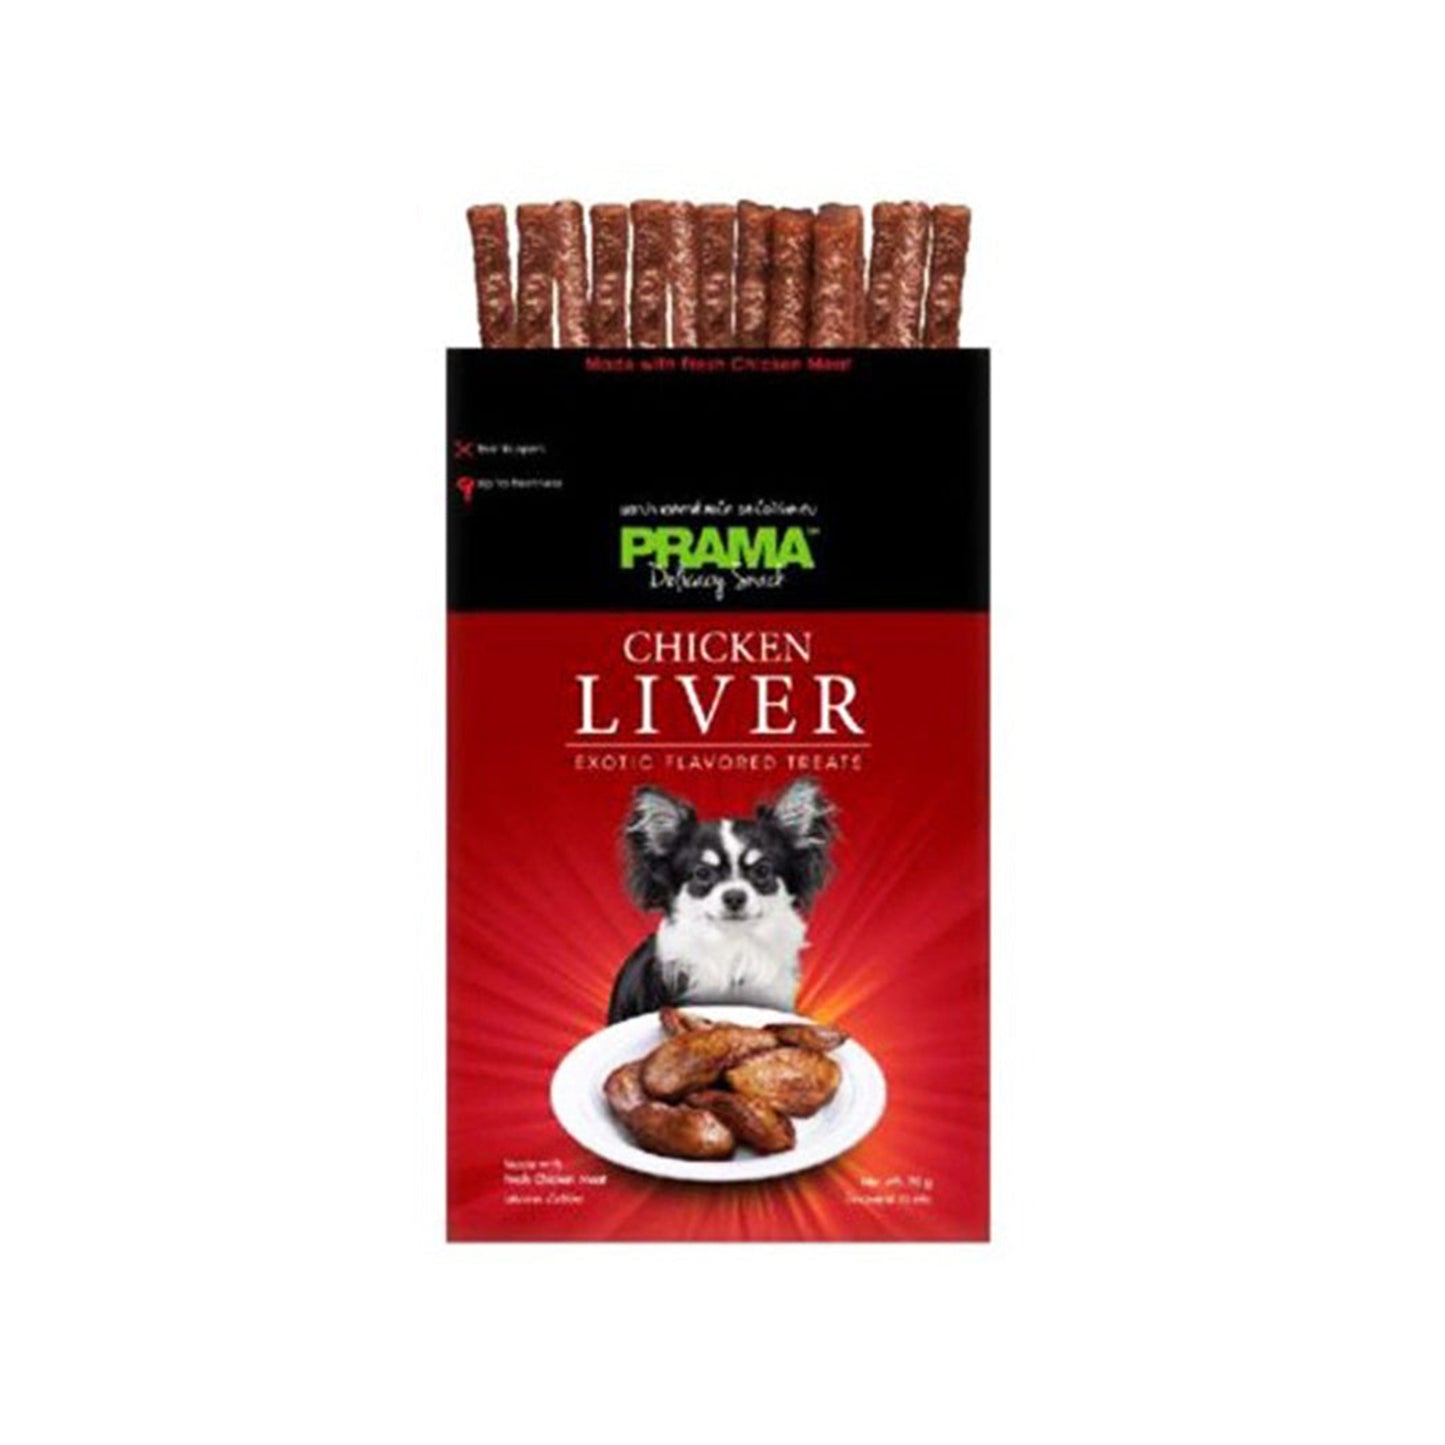 Prama - Chicken Liver Dog Treats (Pack of 6)